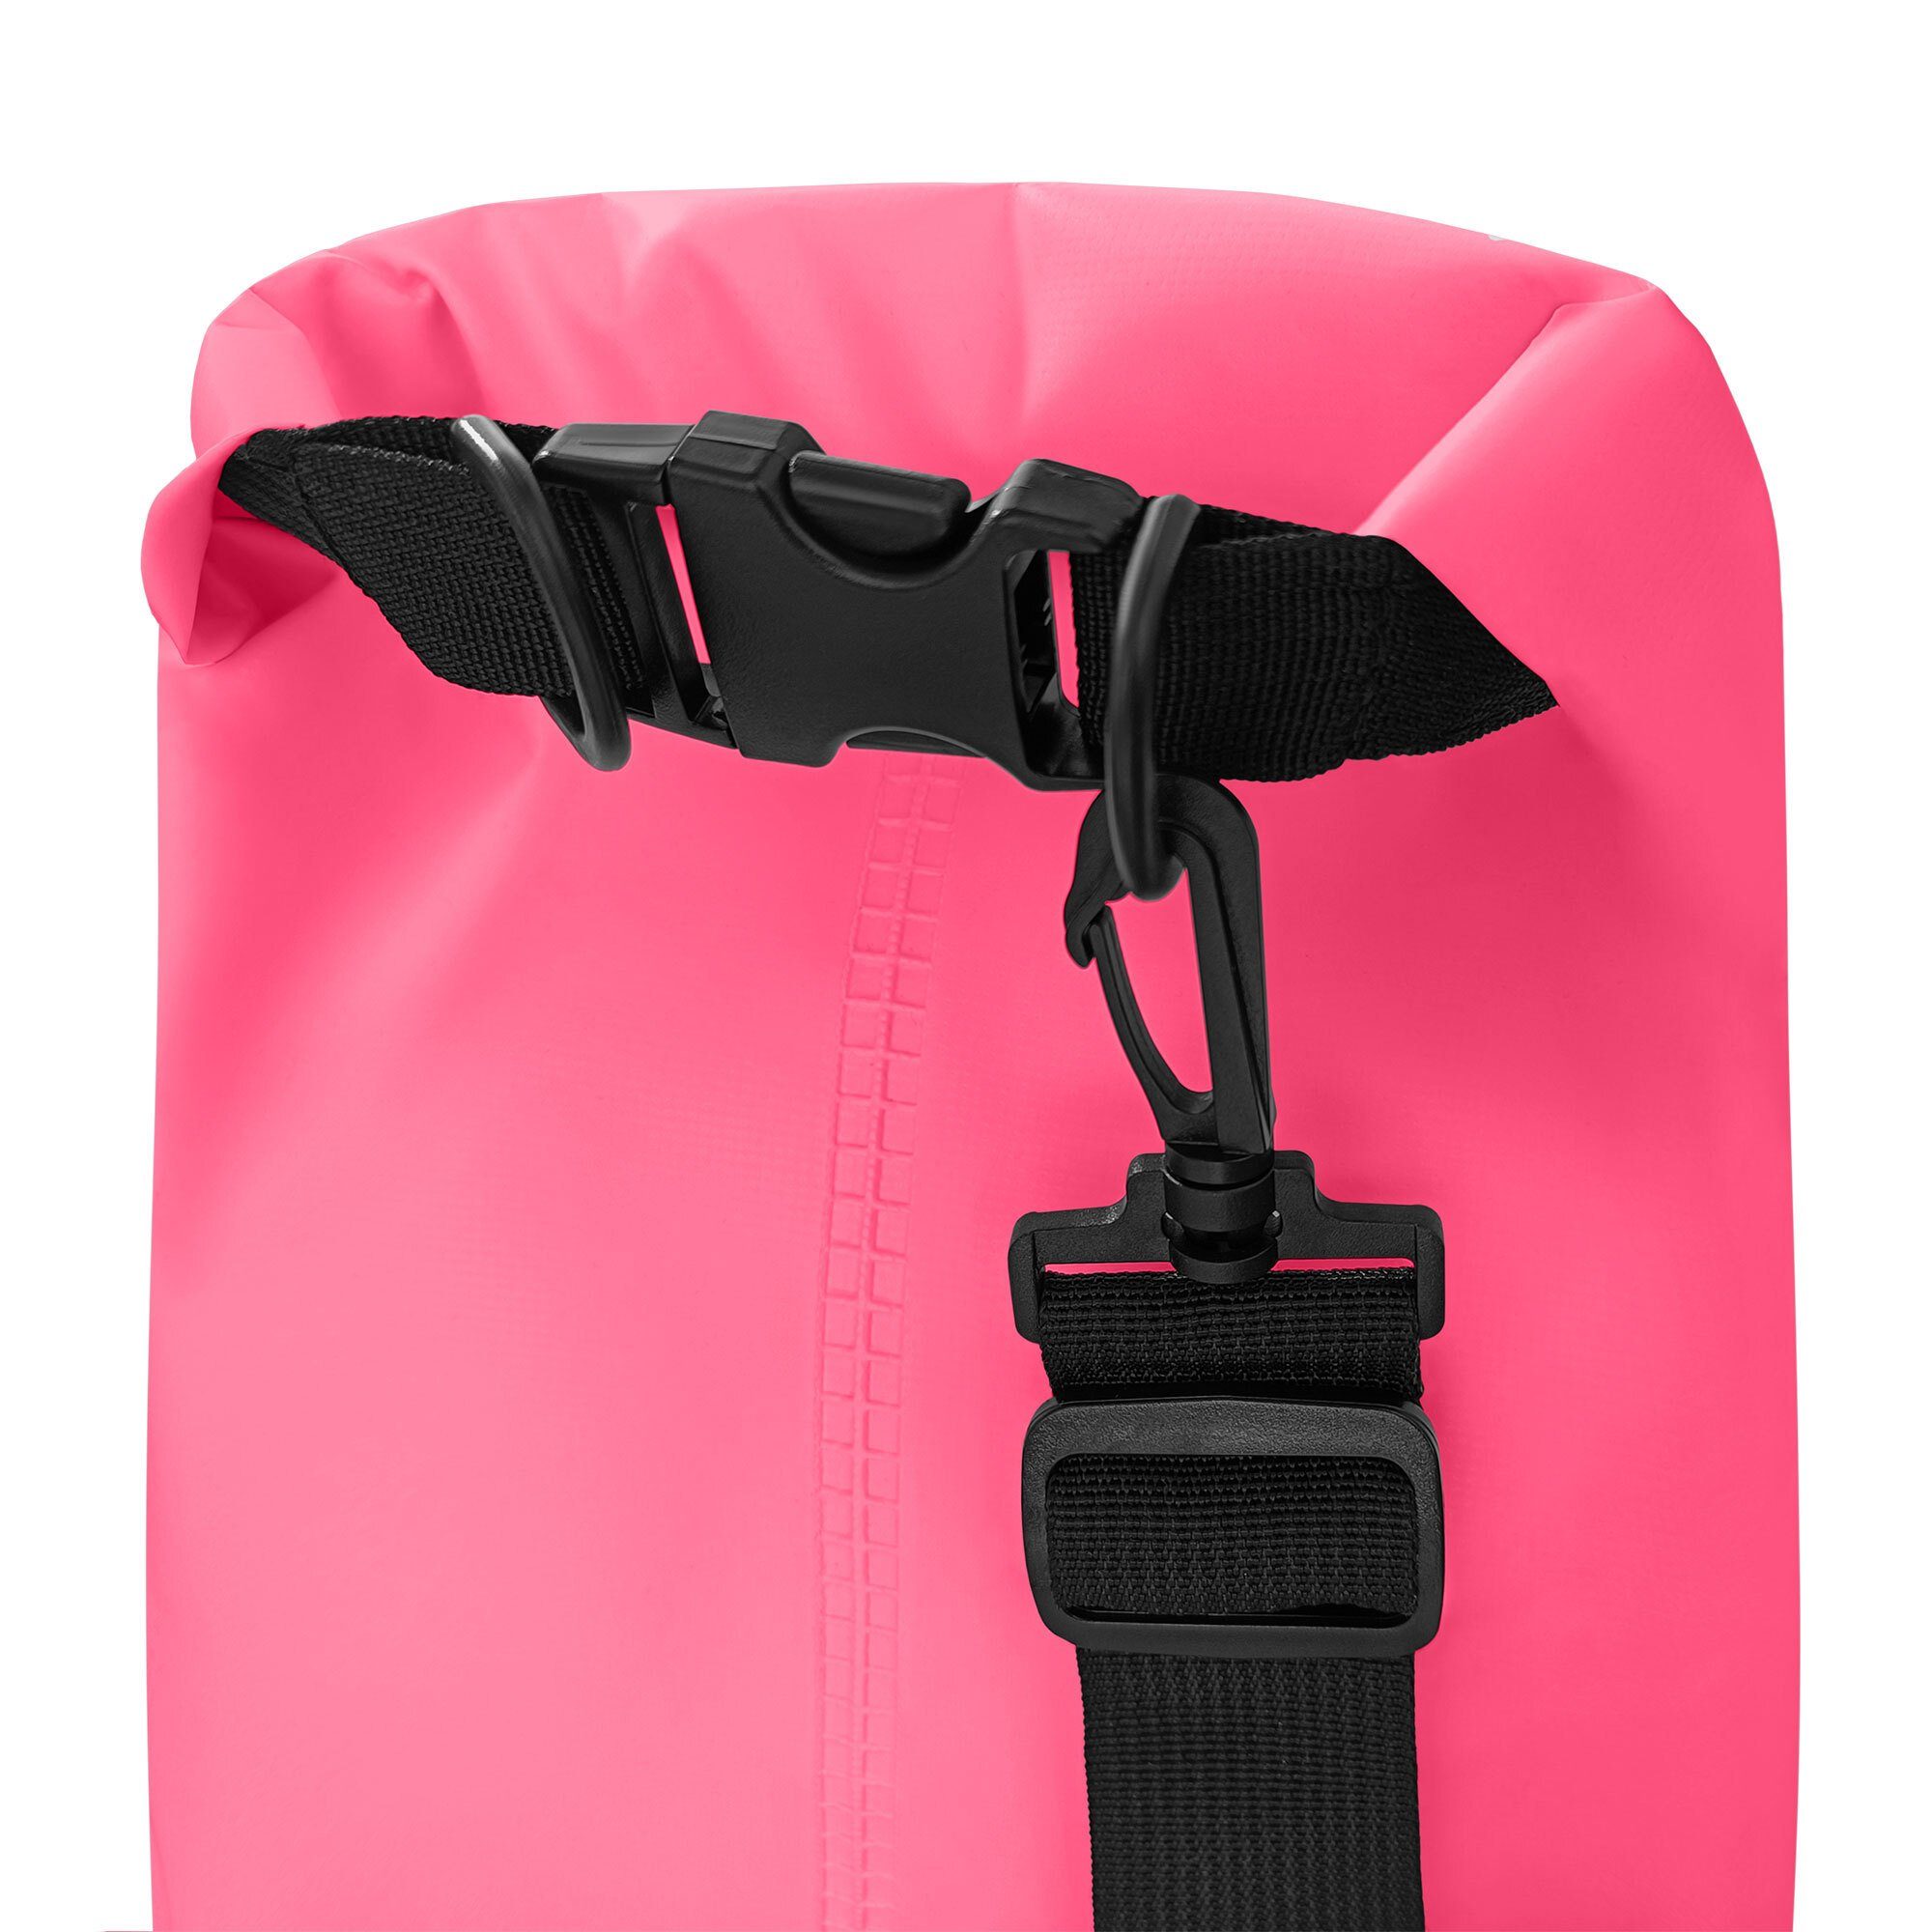 YEAZ 1,5l ISAR packsack wasserfester pink Drybag